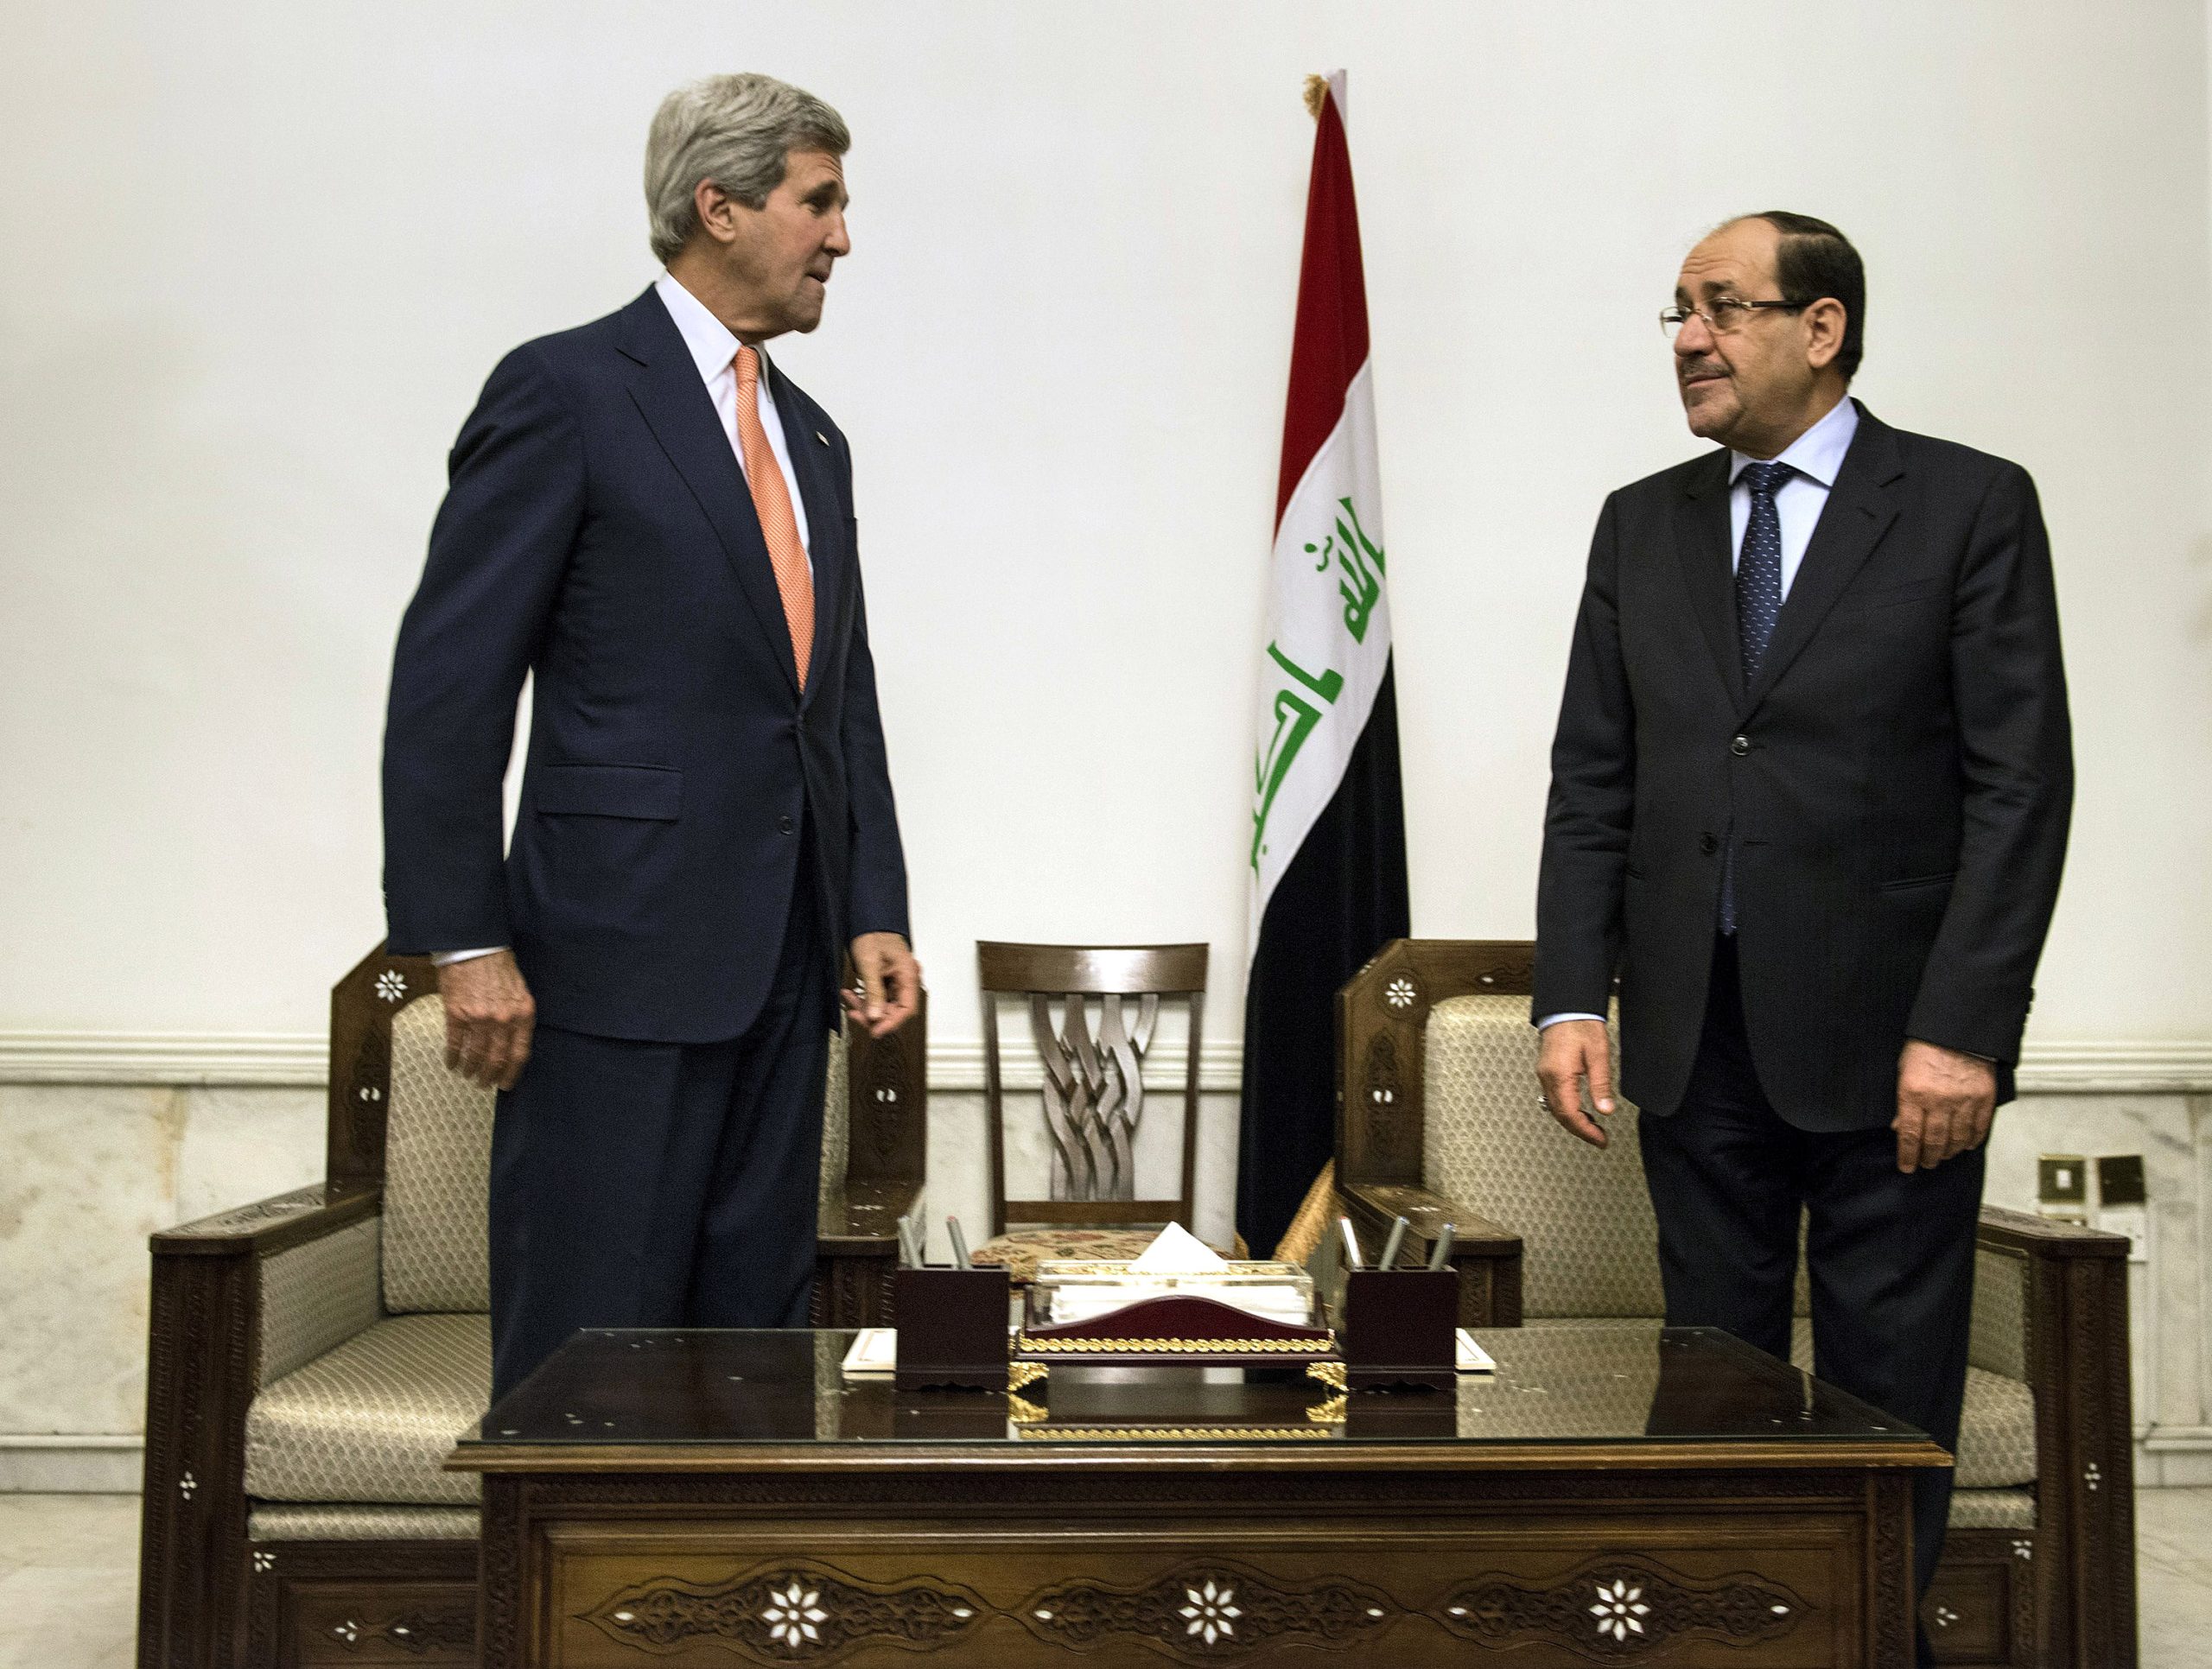 Kerry no Iraque para pressionar Maliki